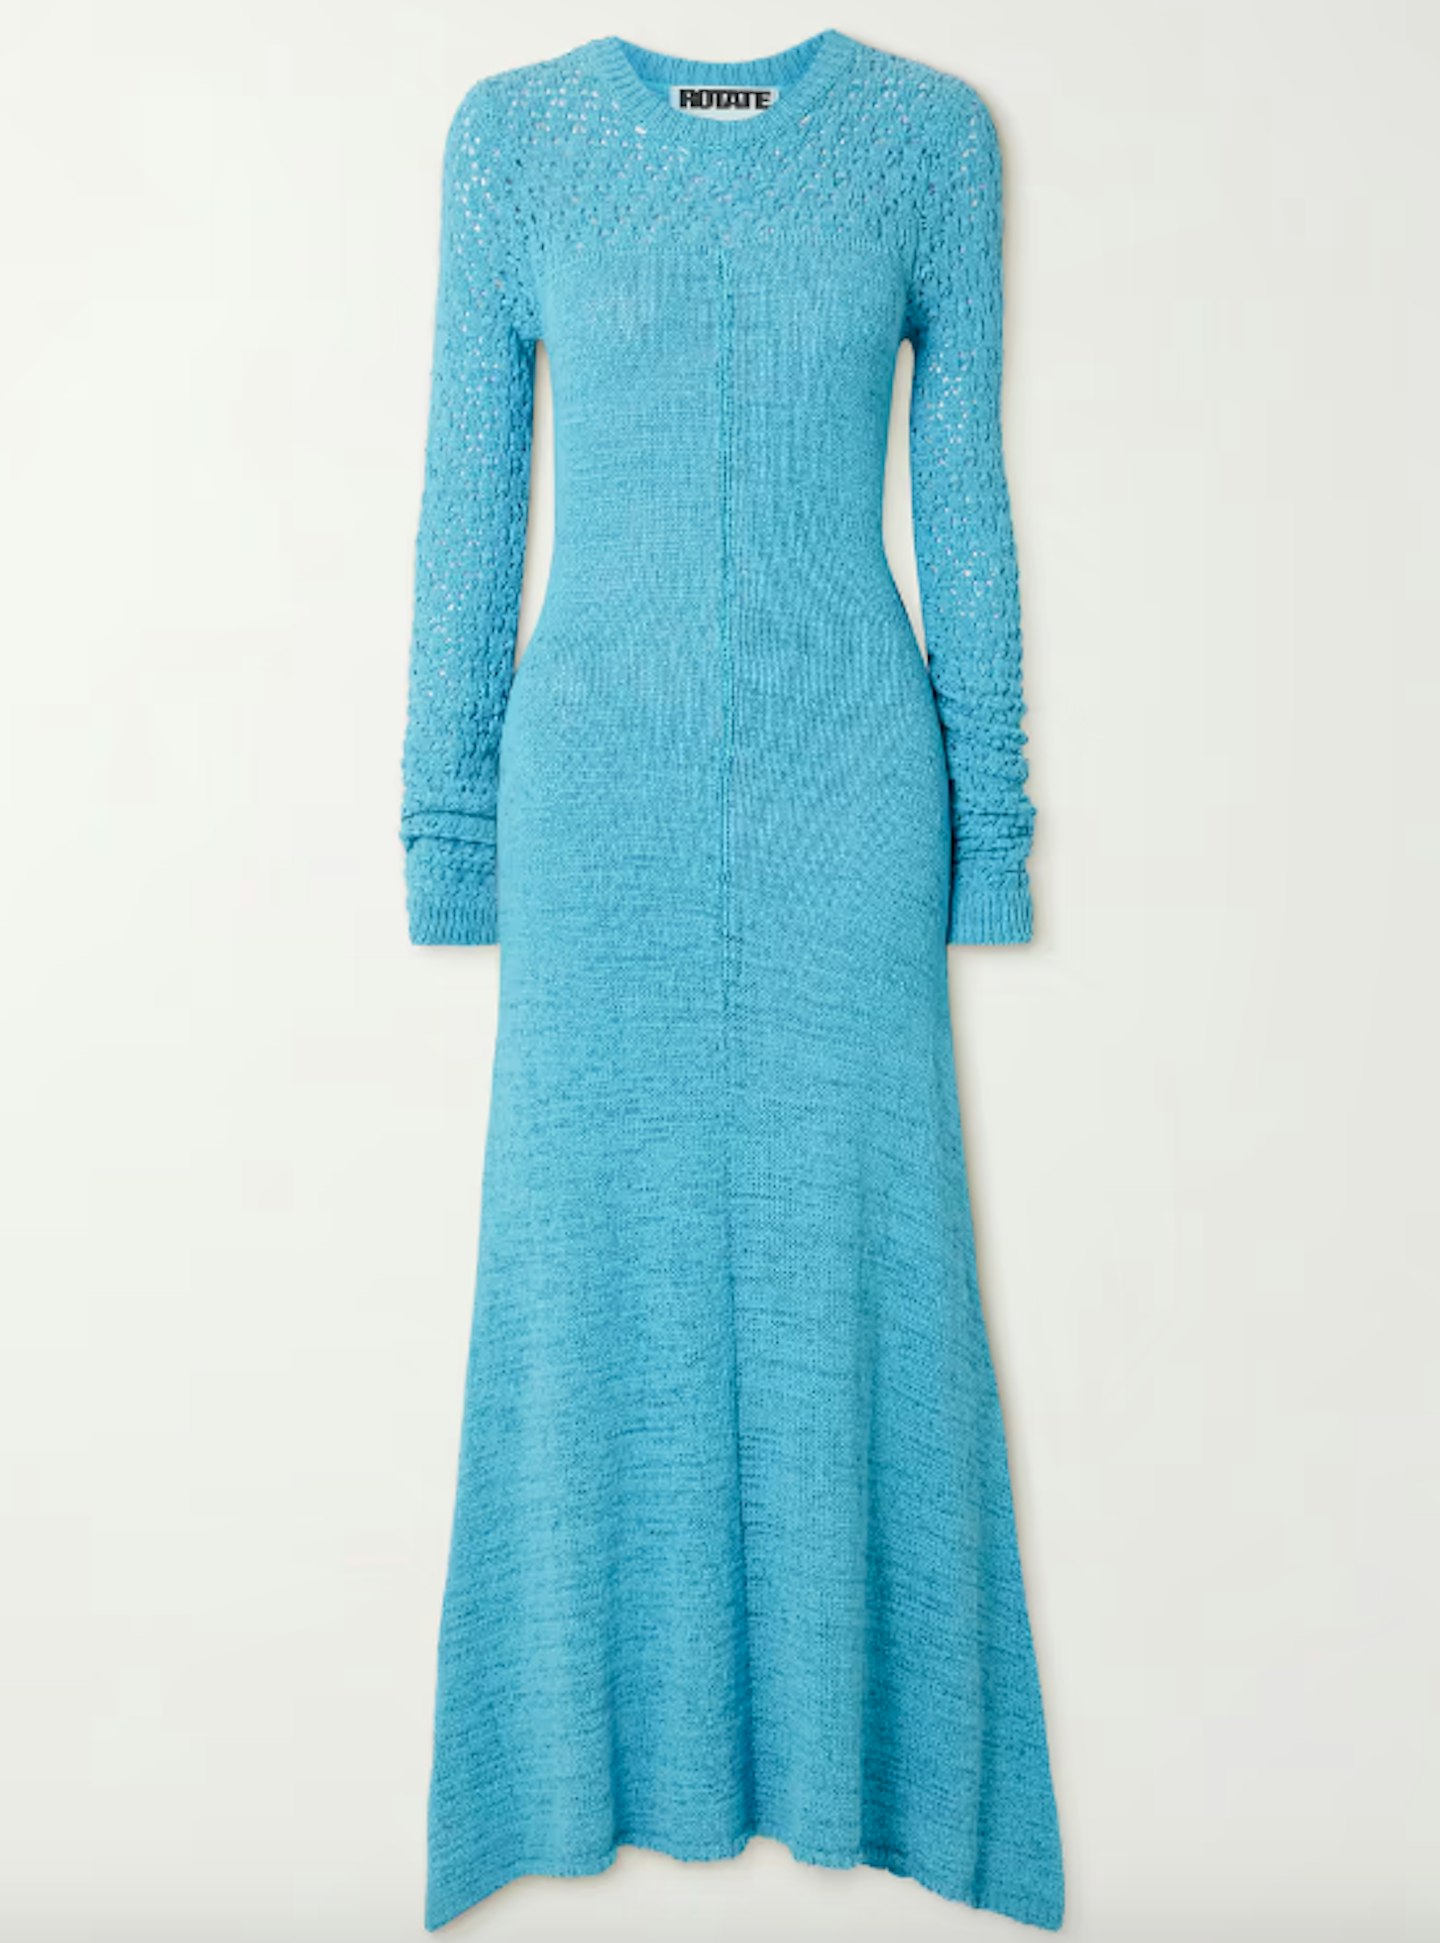 Rotate Birger Christensen, Iveta Open-Knit Organic Cotton-Blend Midi Dress, WAS £280 NOW £140